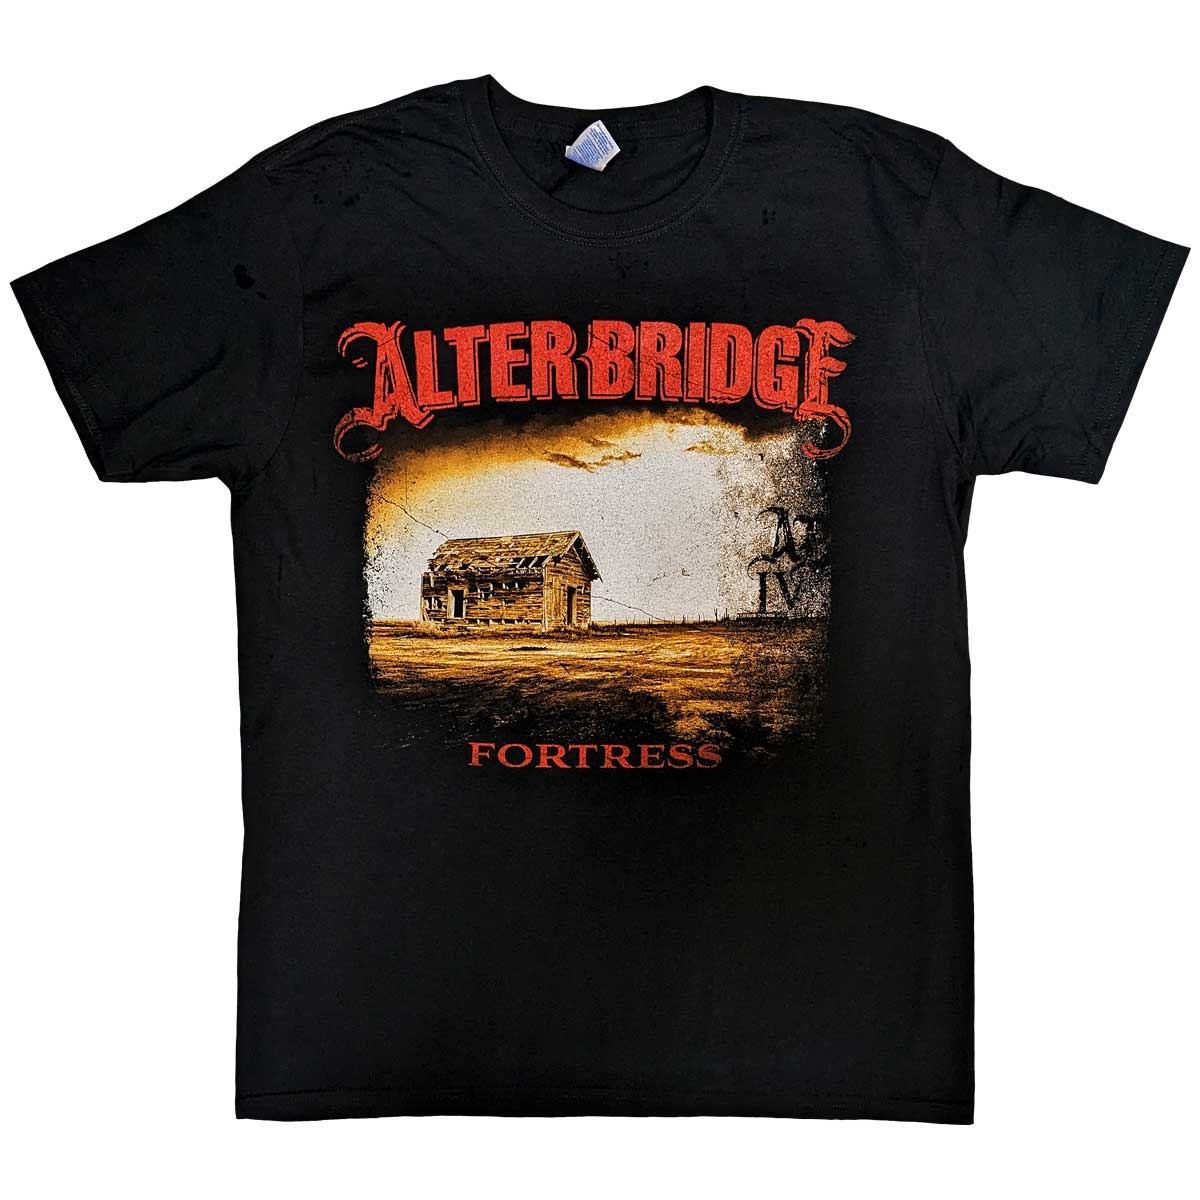 ALTER BRIDGE Fortress 2014 Tour Dates